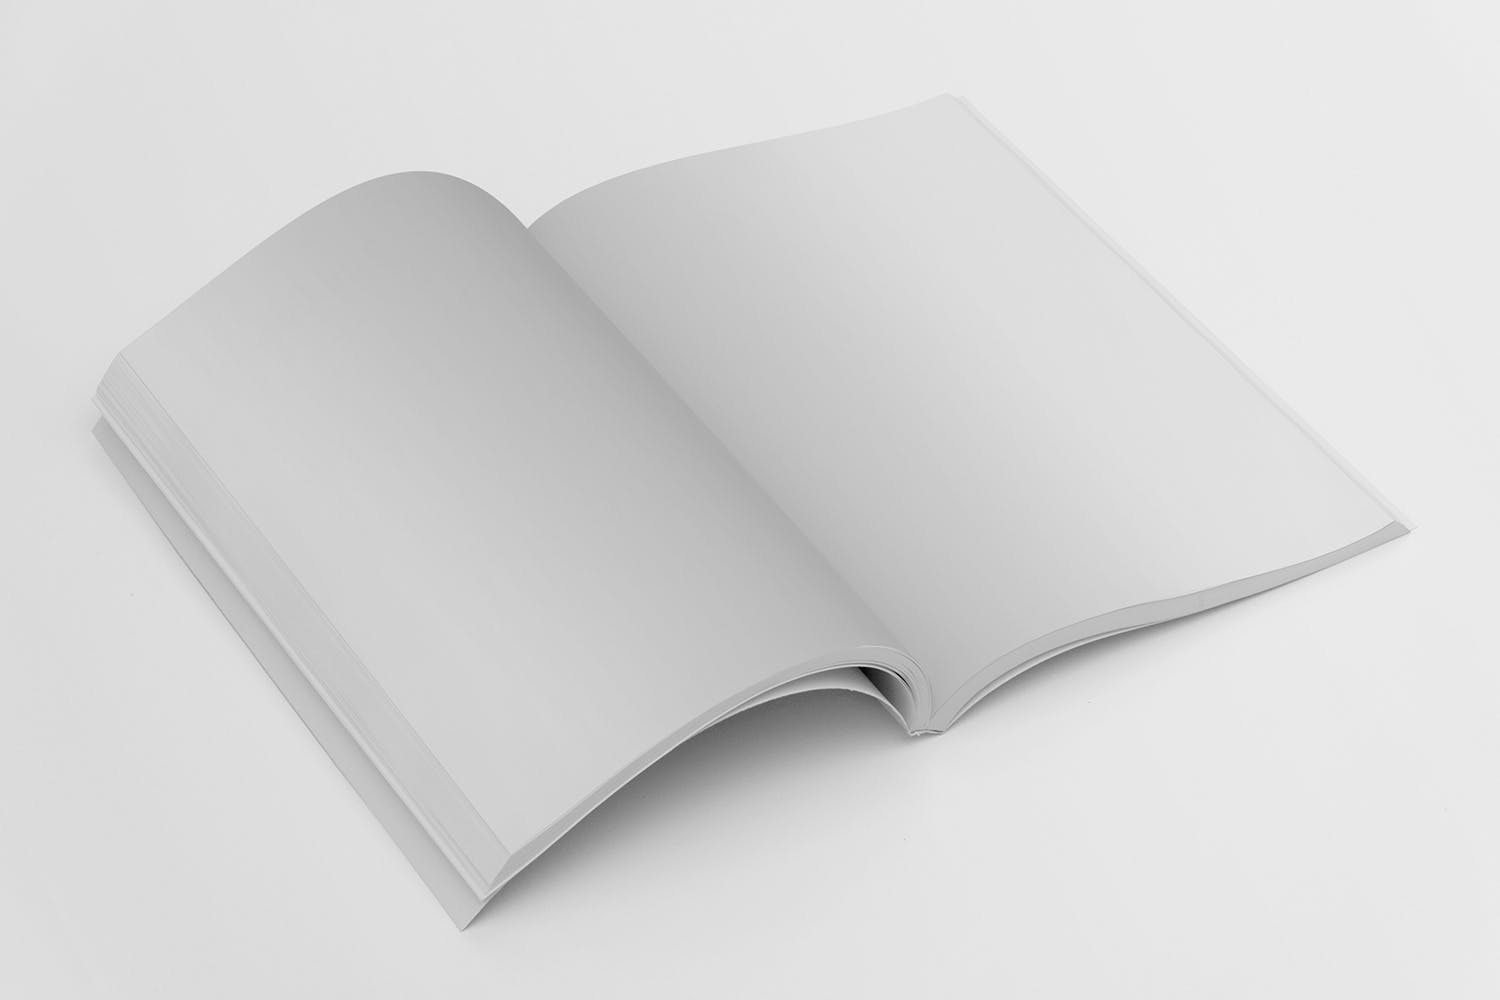 杂志内页排版设计翻页透视图样机16图库精选 Magazine Mockup Folded Page Perspective View插图(1)